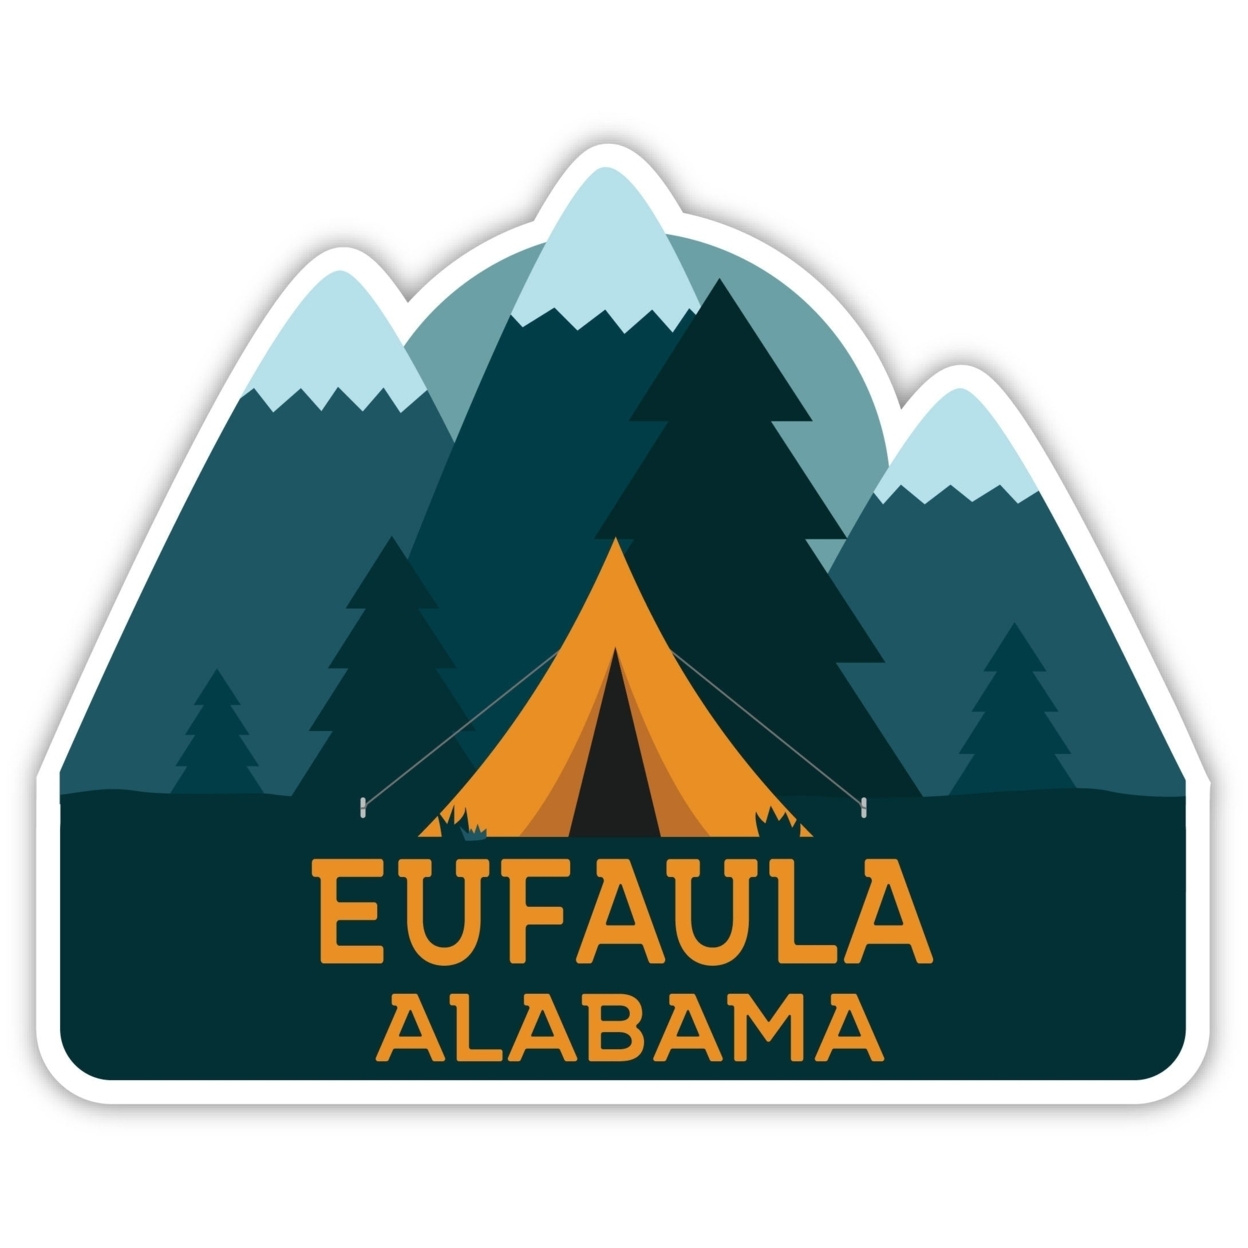 Eufaula Alabama Souvenir Decorative Stickers (Choose Theme And Size) - 4-Pack, 12-Inch, Camp Life